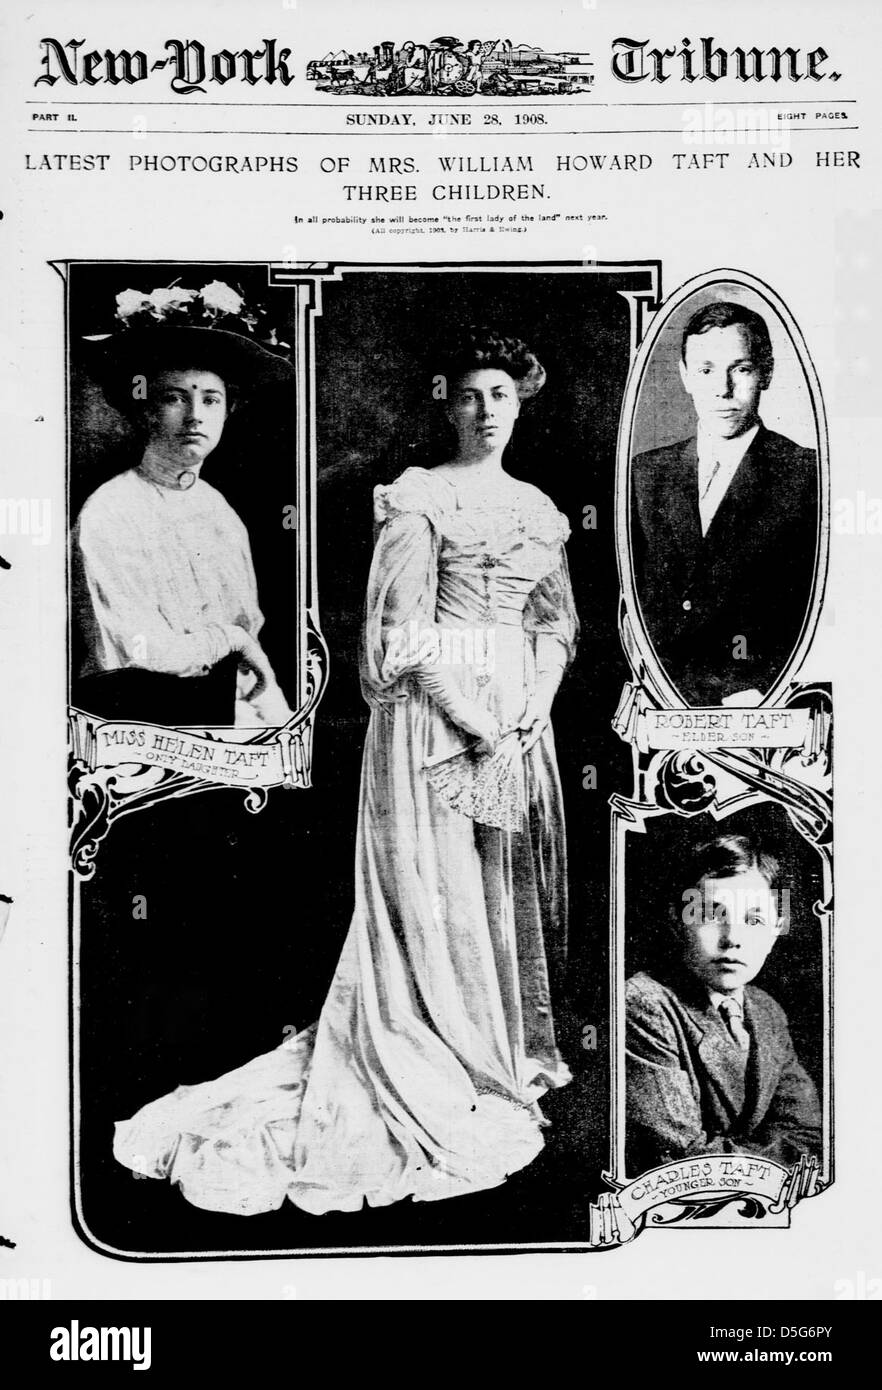 Latest photographs of Mrs. William Howard Taft and her three children (LOC) Stock Photo